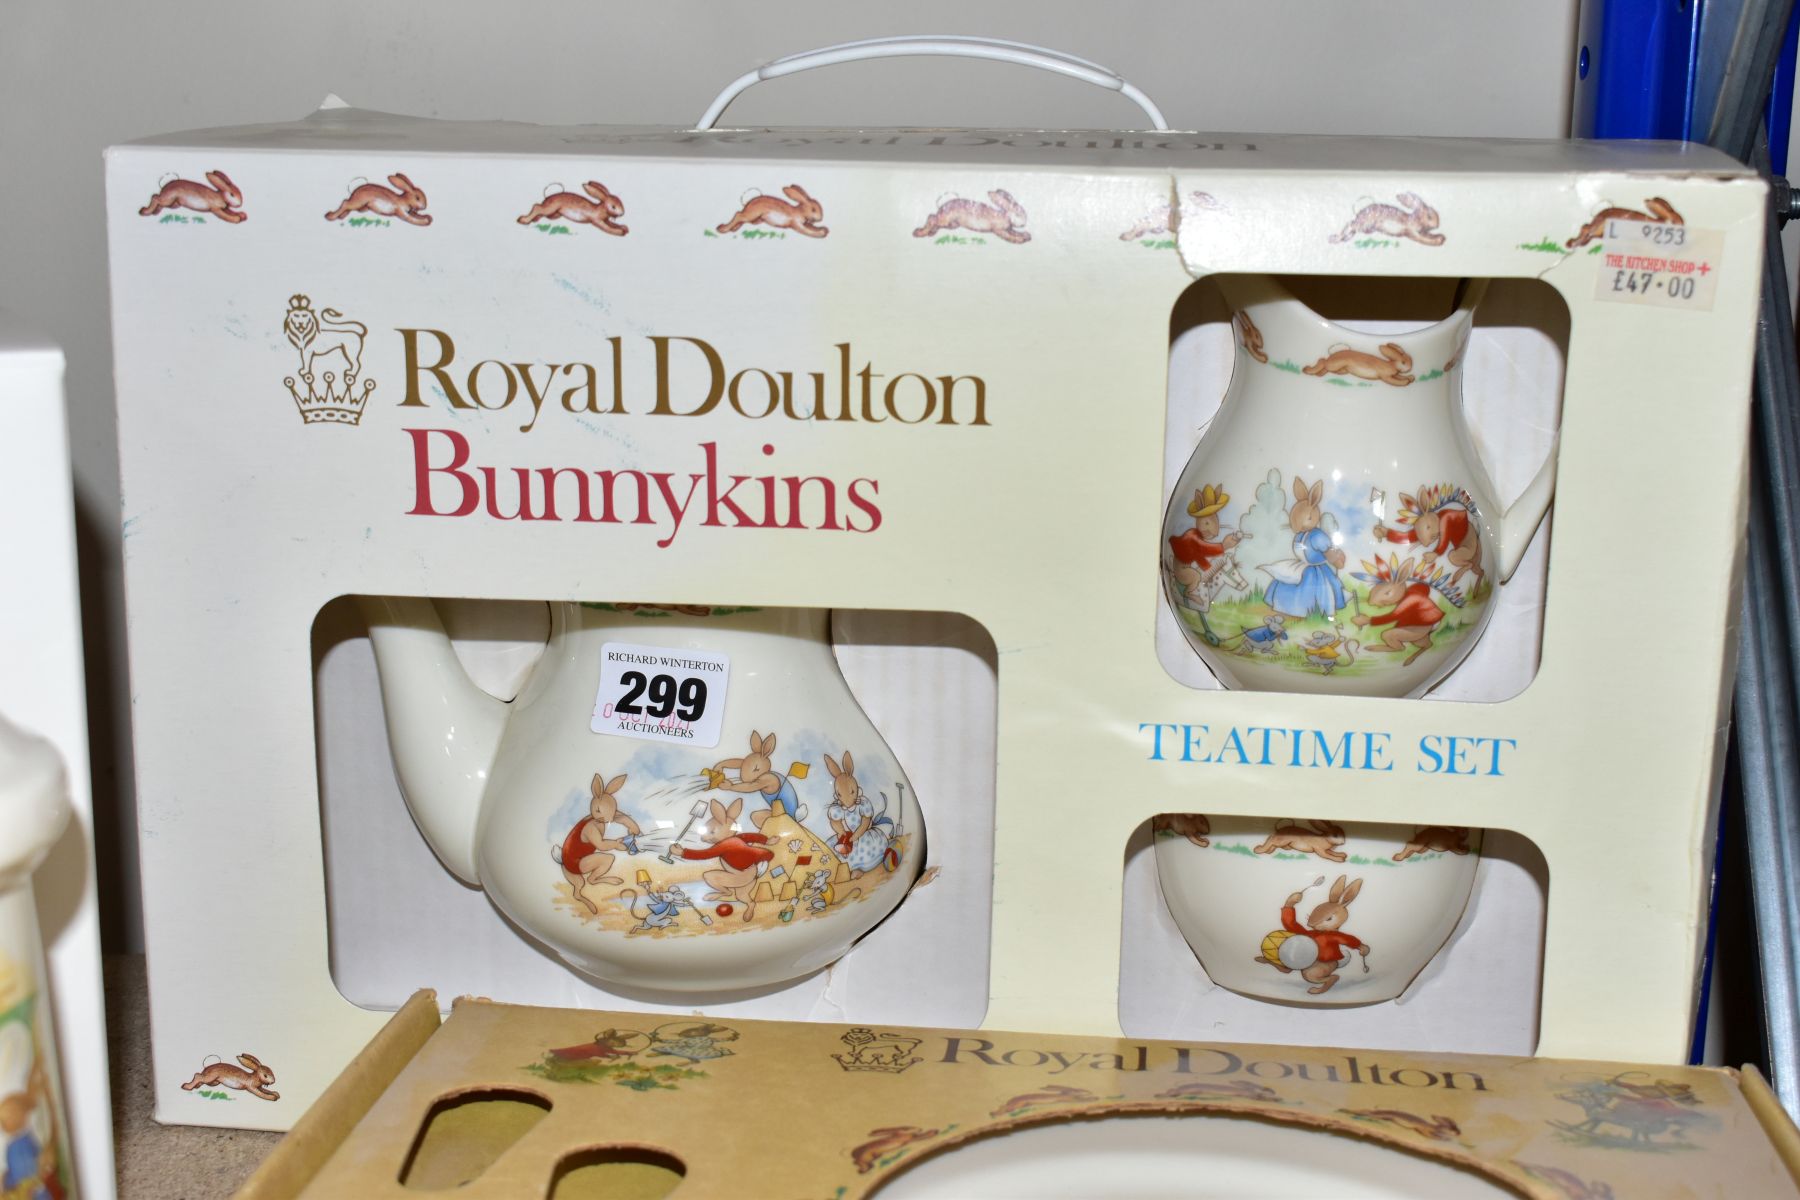 TWO BOXED ROYAL DOULTON BUNNYKINS EARTHENWARE TABLEWARE SETS, comprising a 'Tea Time set' teapot ( - Image 4 of 7